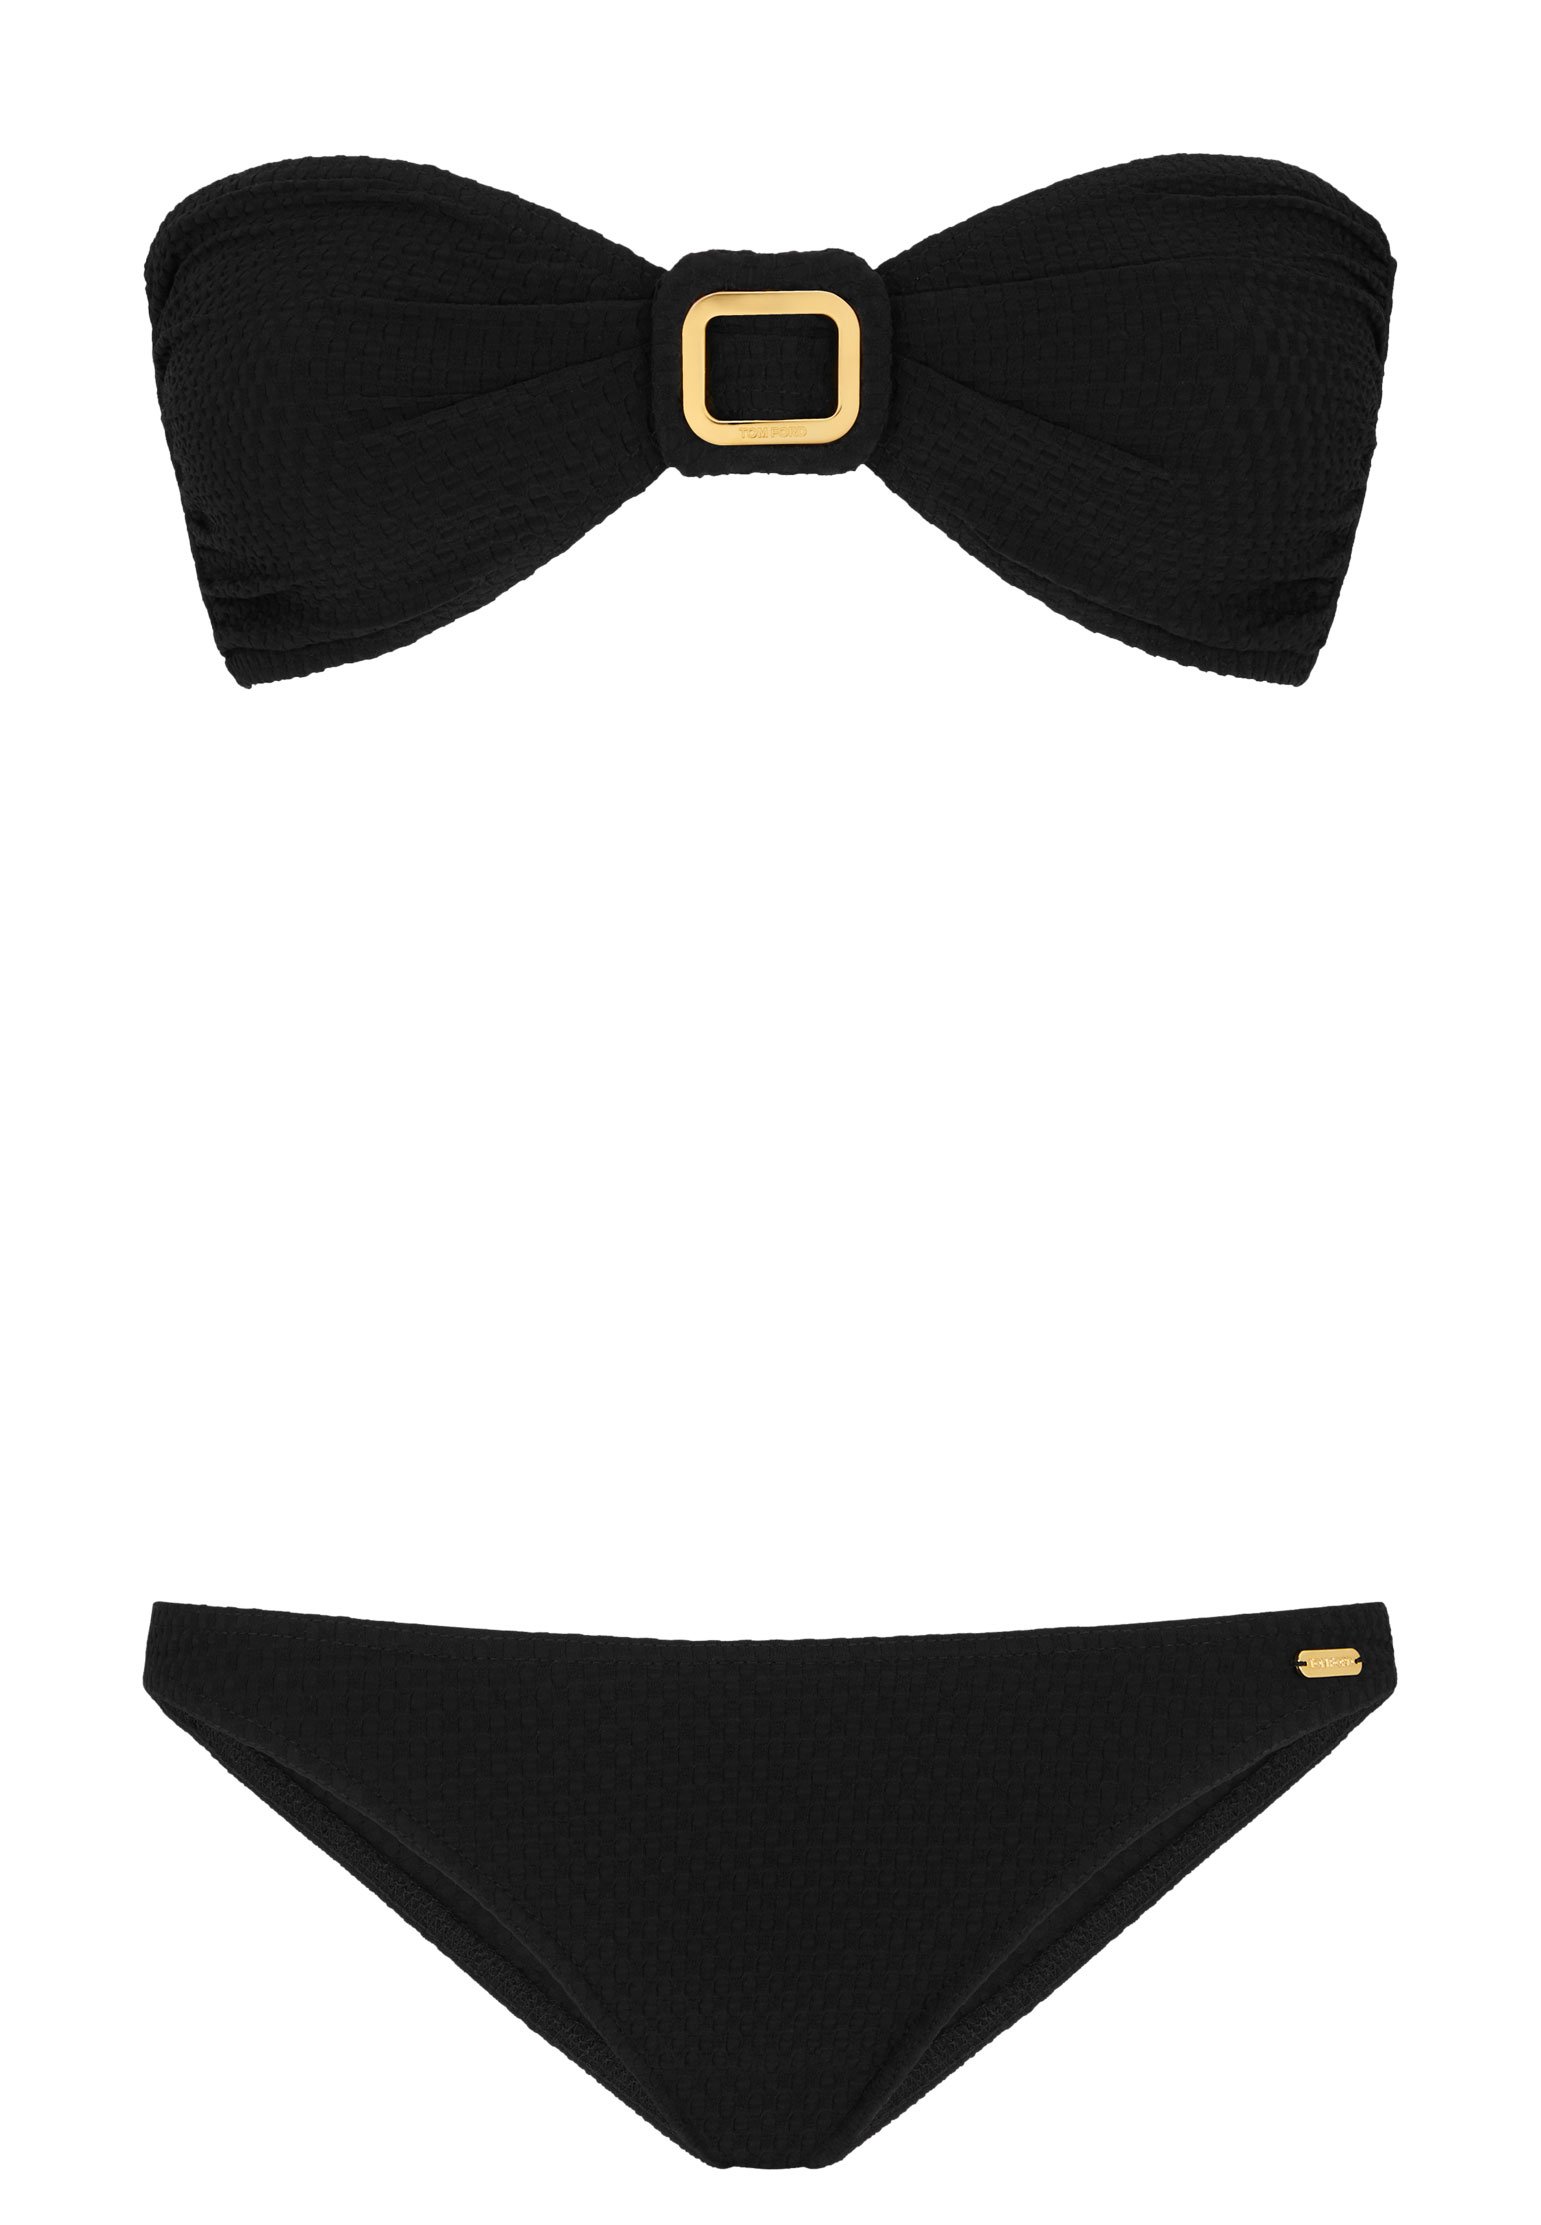 Bikini TOM FORD Color: black (Code: 3710) in online store Allure